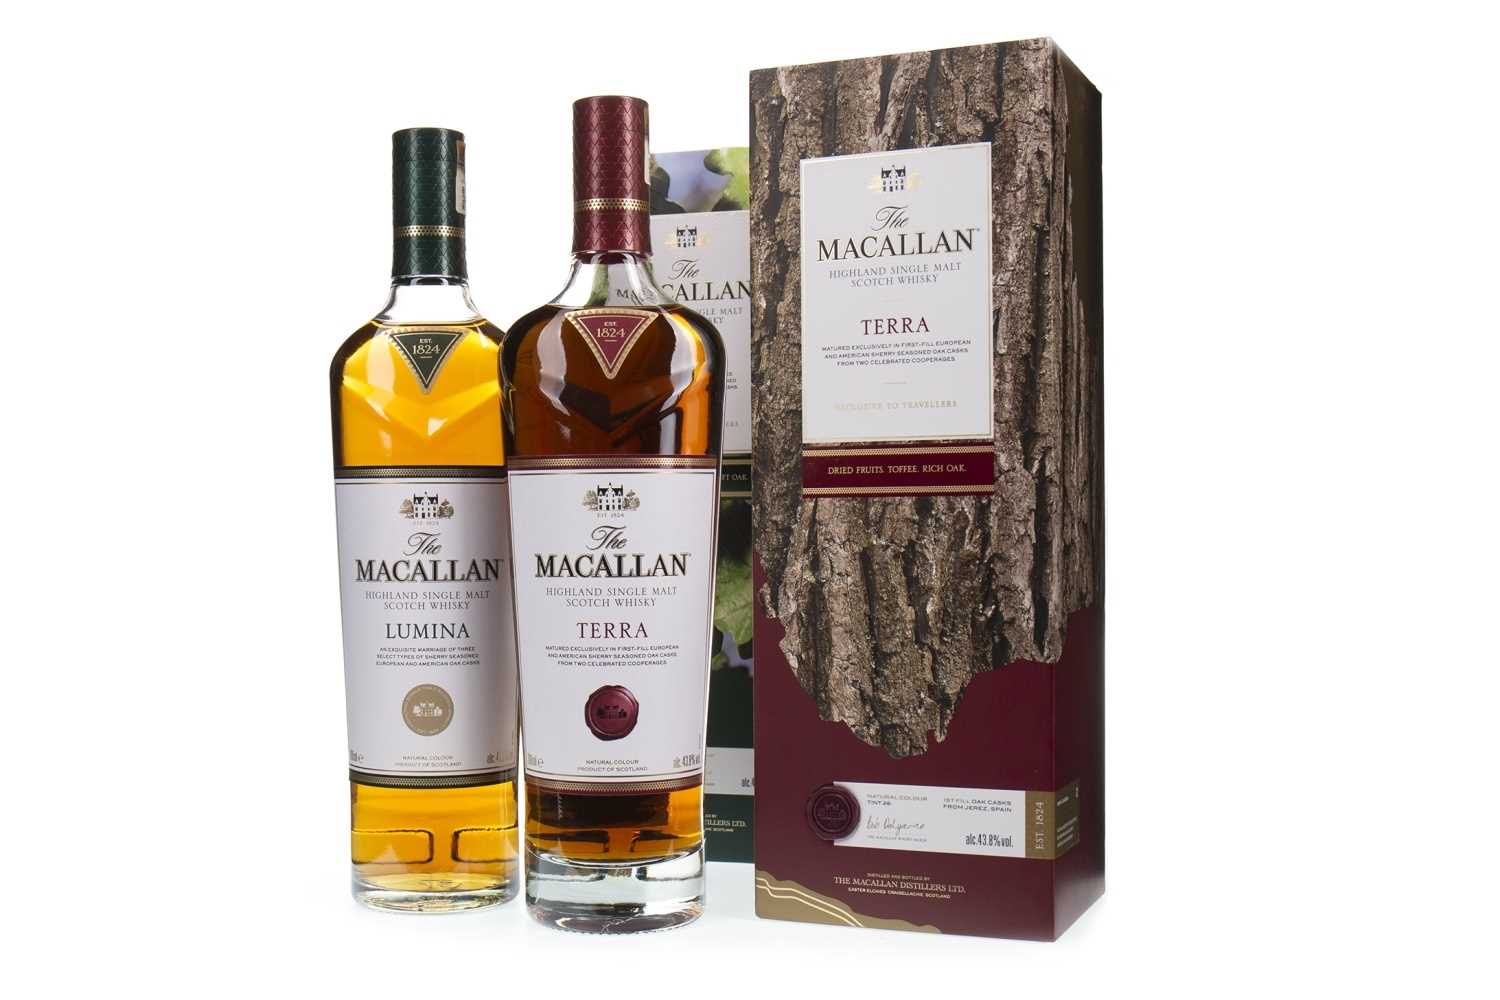 The Macallan Terra Single Malt Scotch Whisky